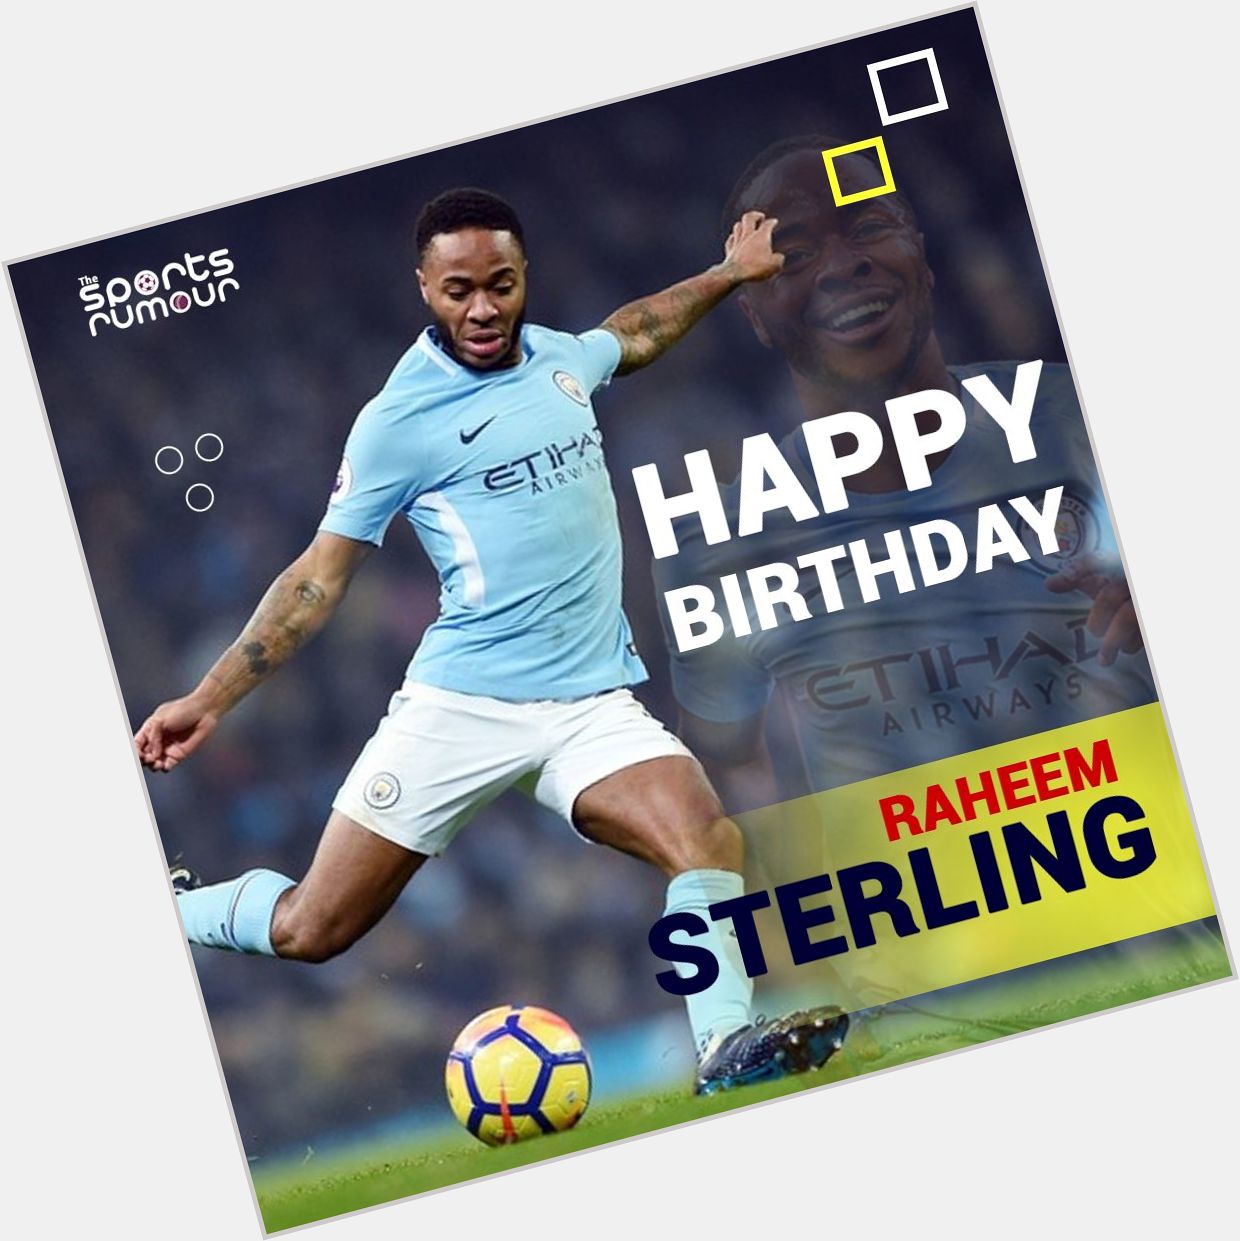 Wishing him a very very happy birthday Raheem Sterling. The English footballer turns 24 today. 